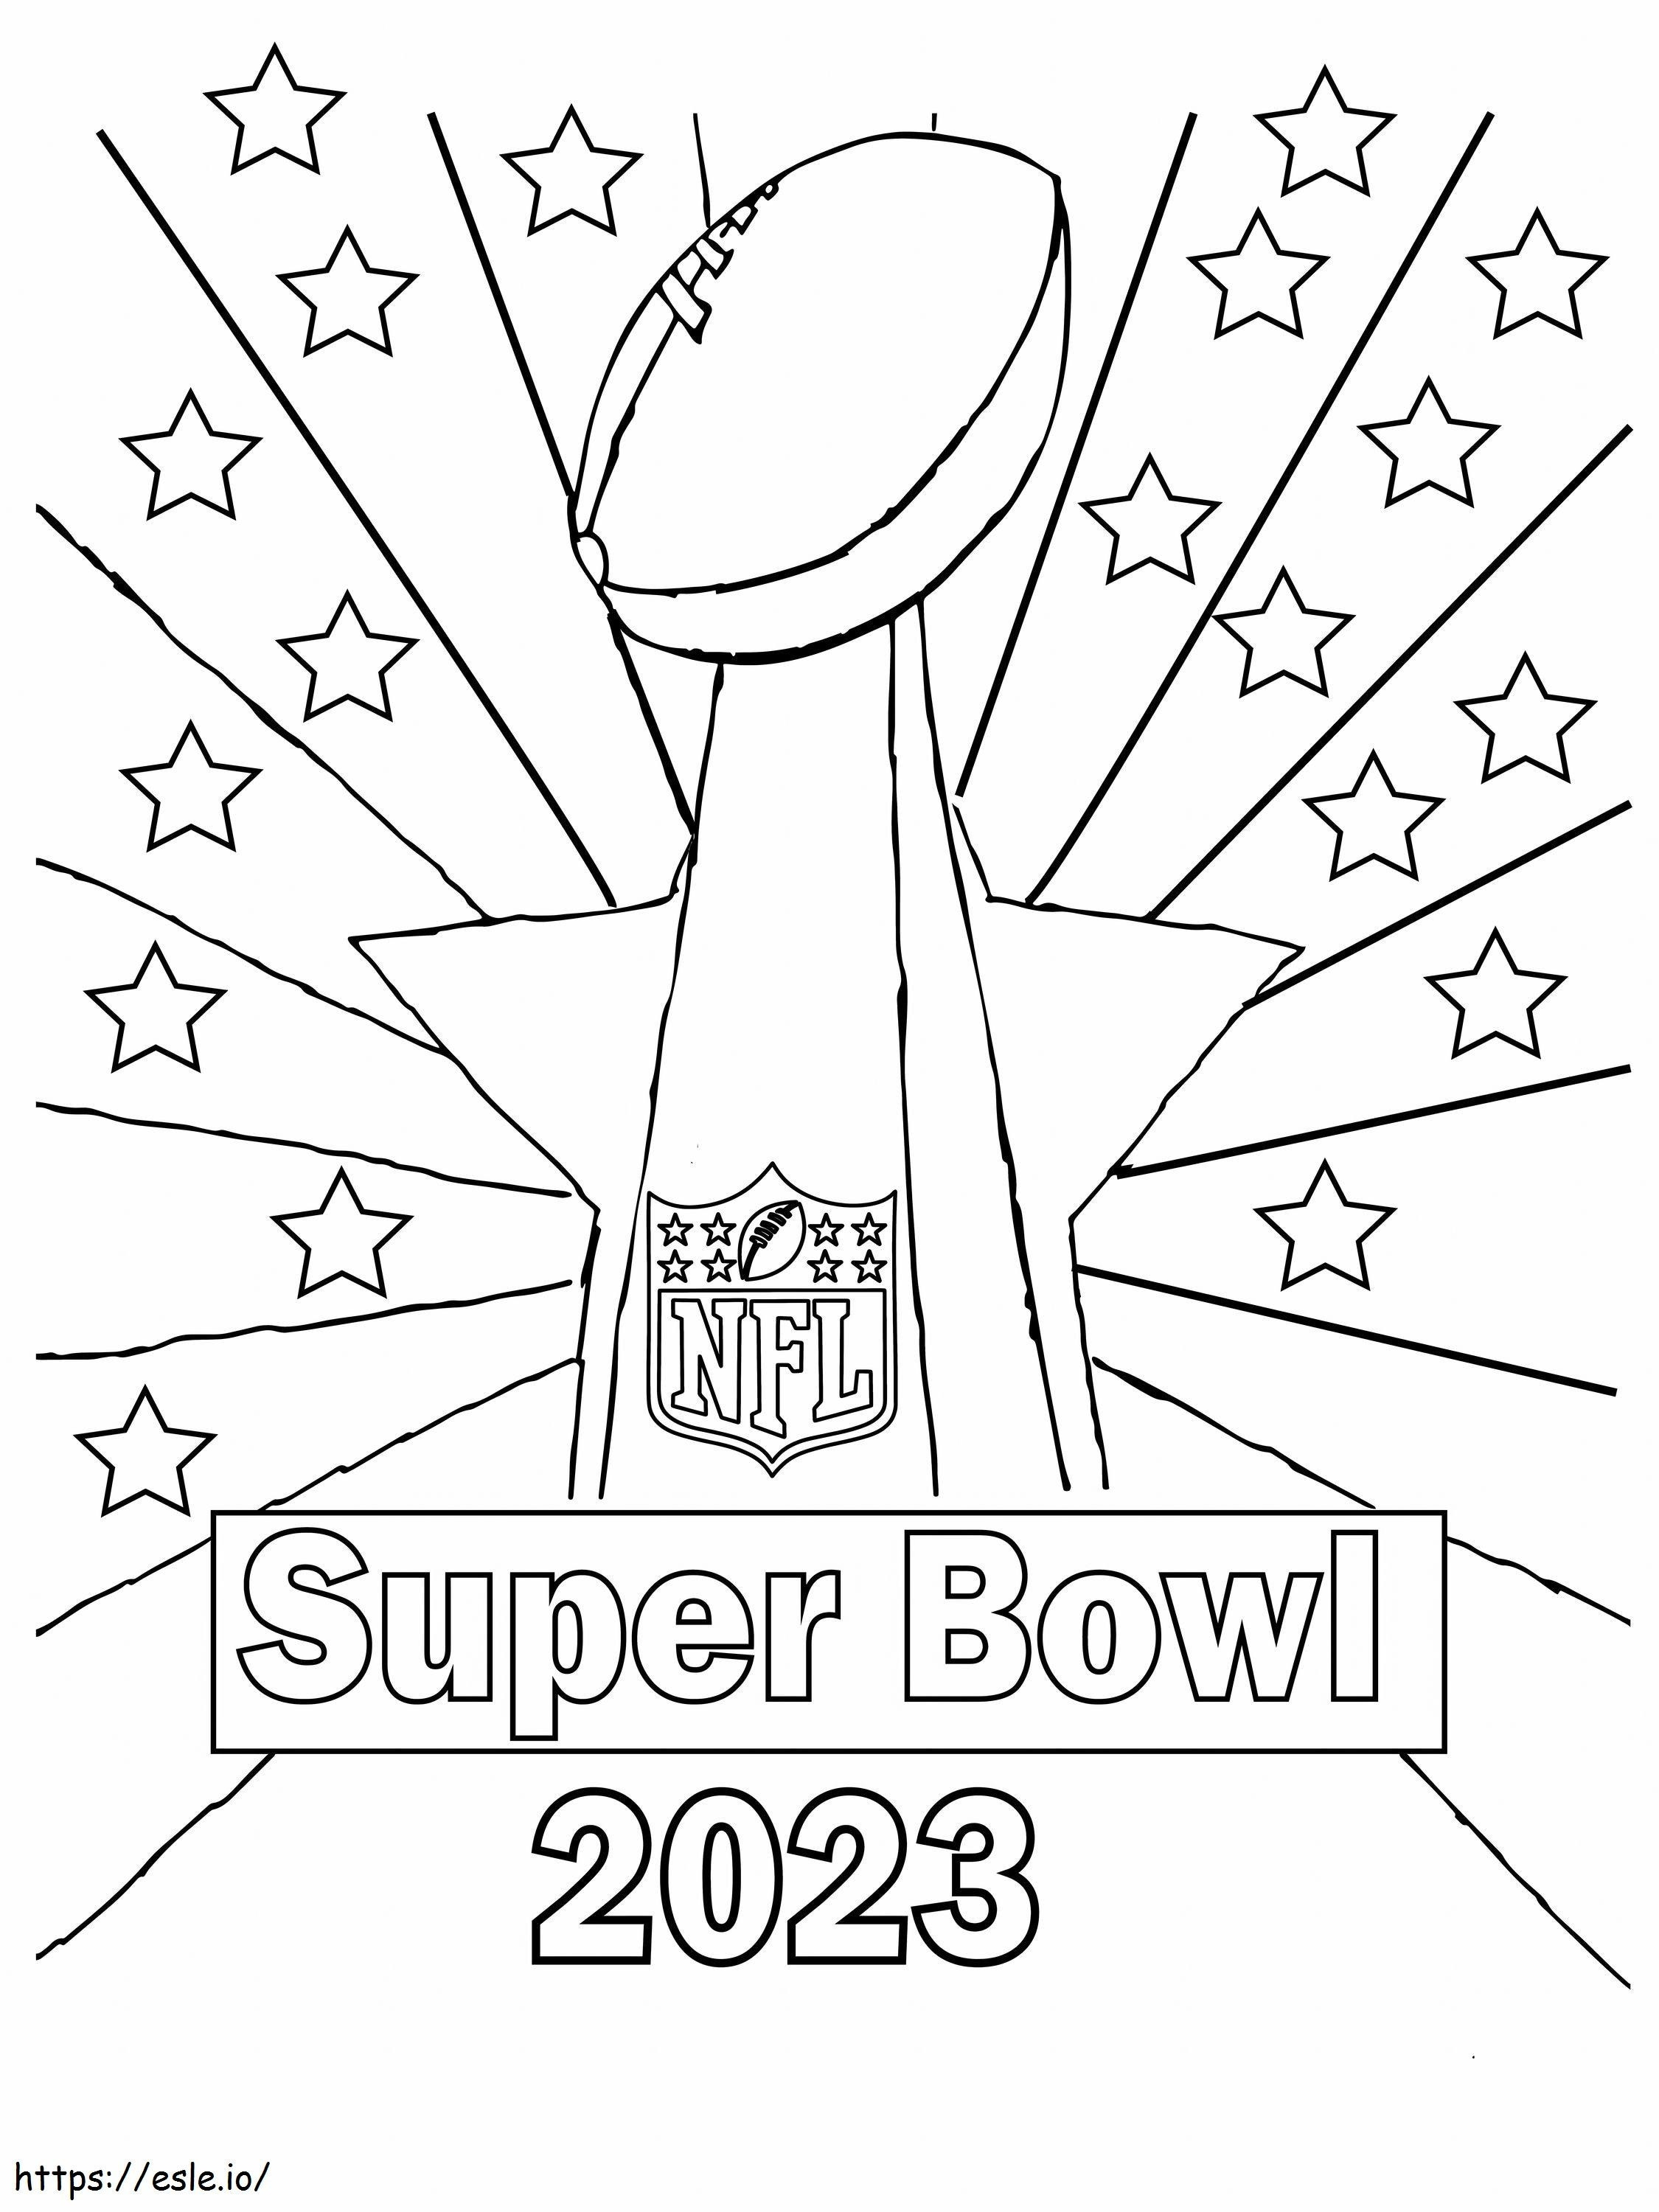 Super Bowl 2023 2 ausmalbilder